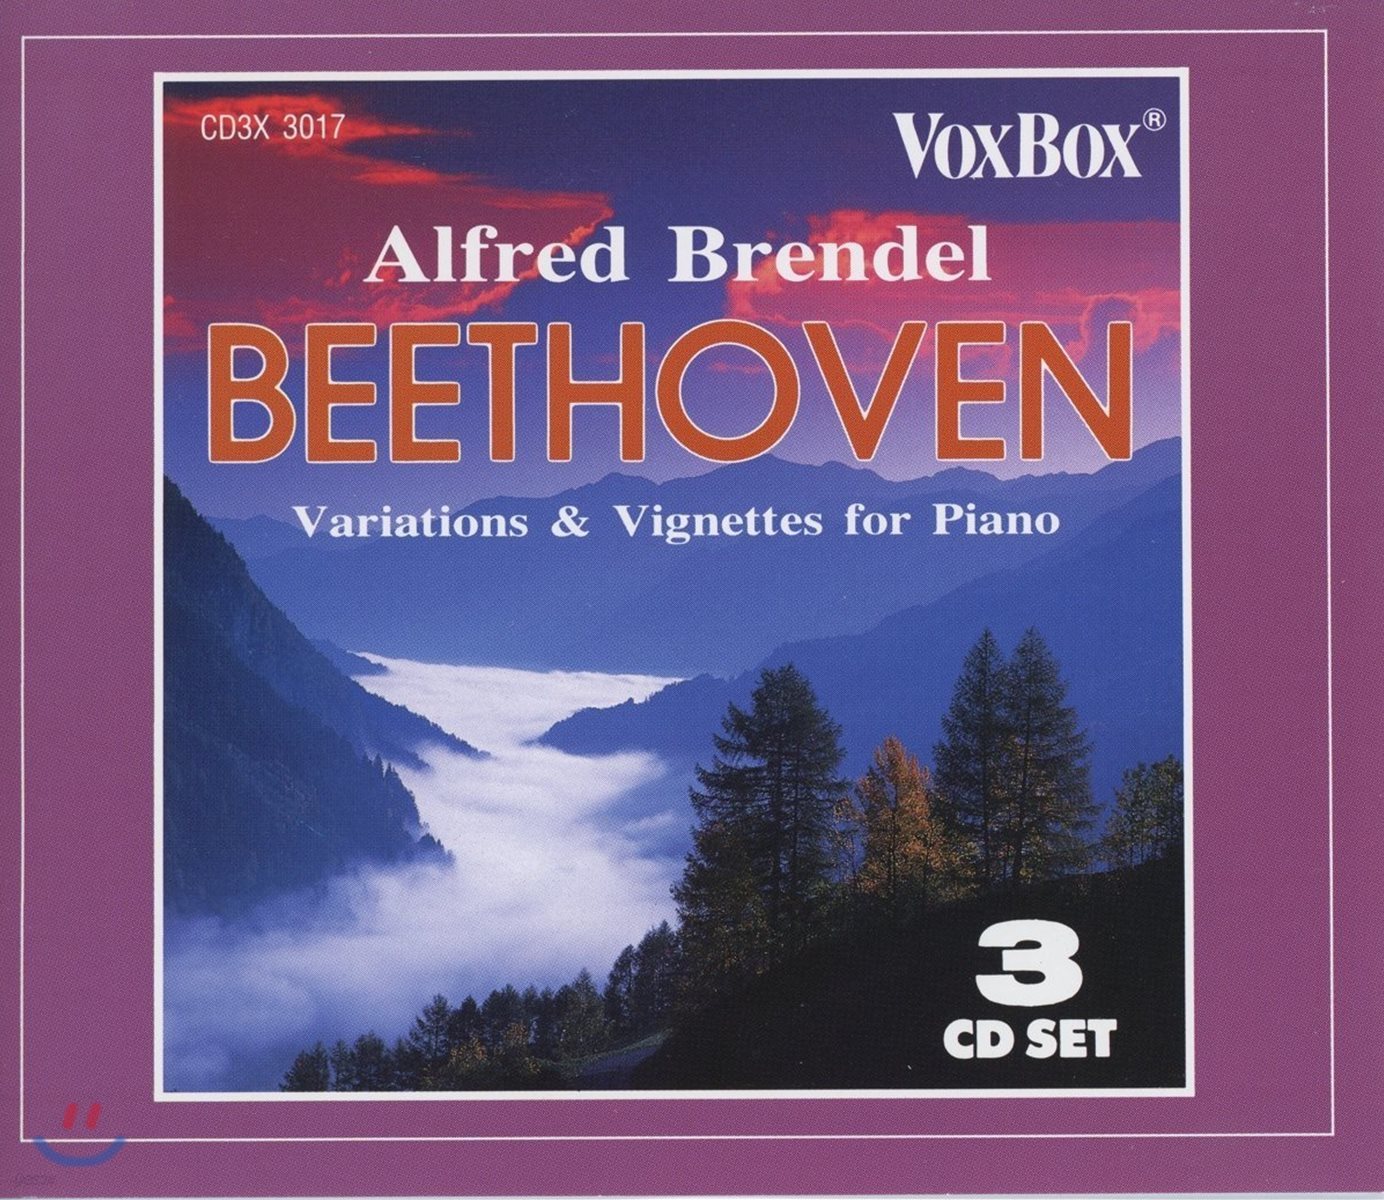 Alfred Brendel 베토벤: 피아노를 위한 변주곡과 비네트 (Beethoven: Variations & Vignettes for Piano)